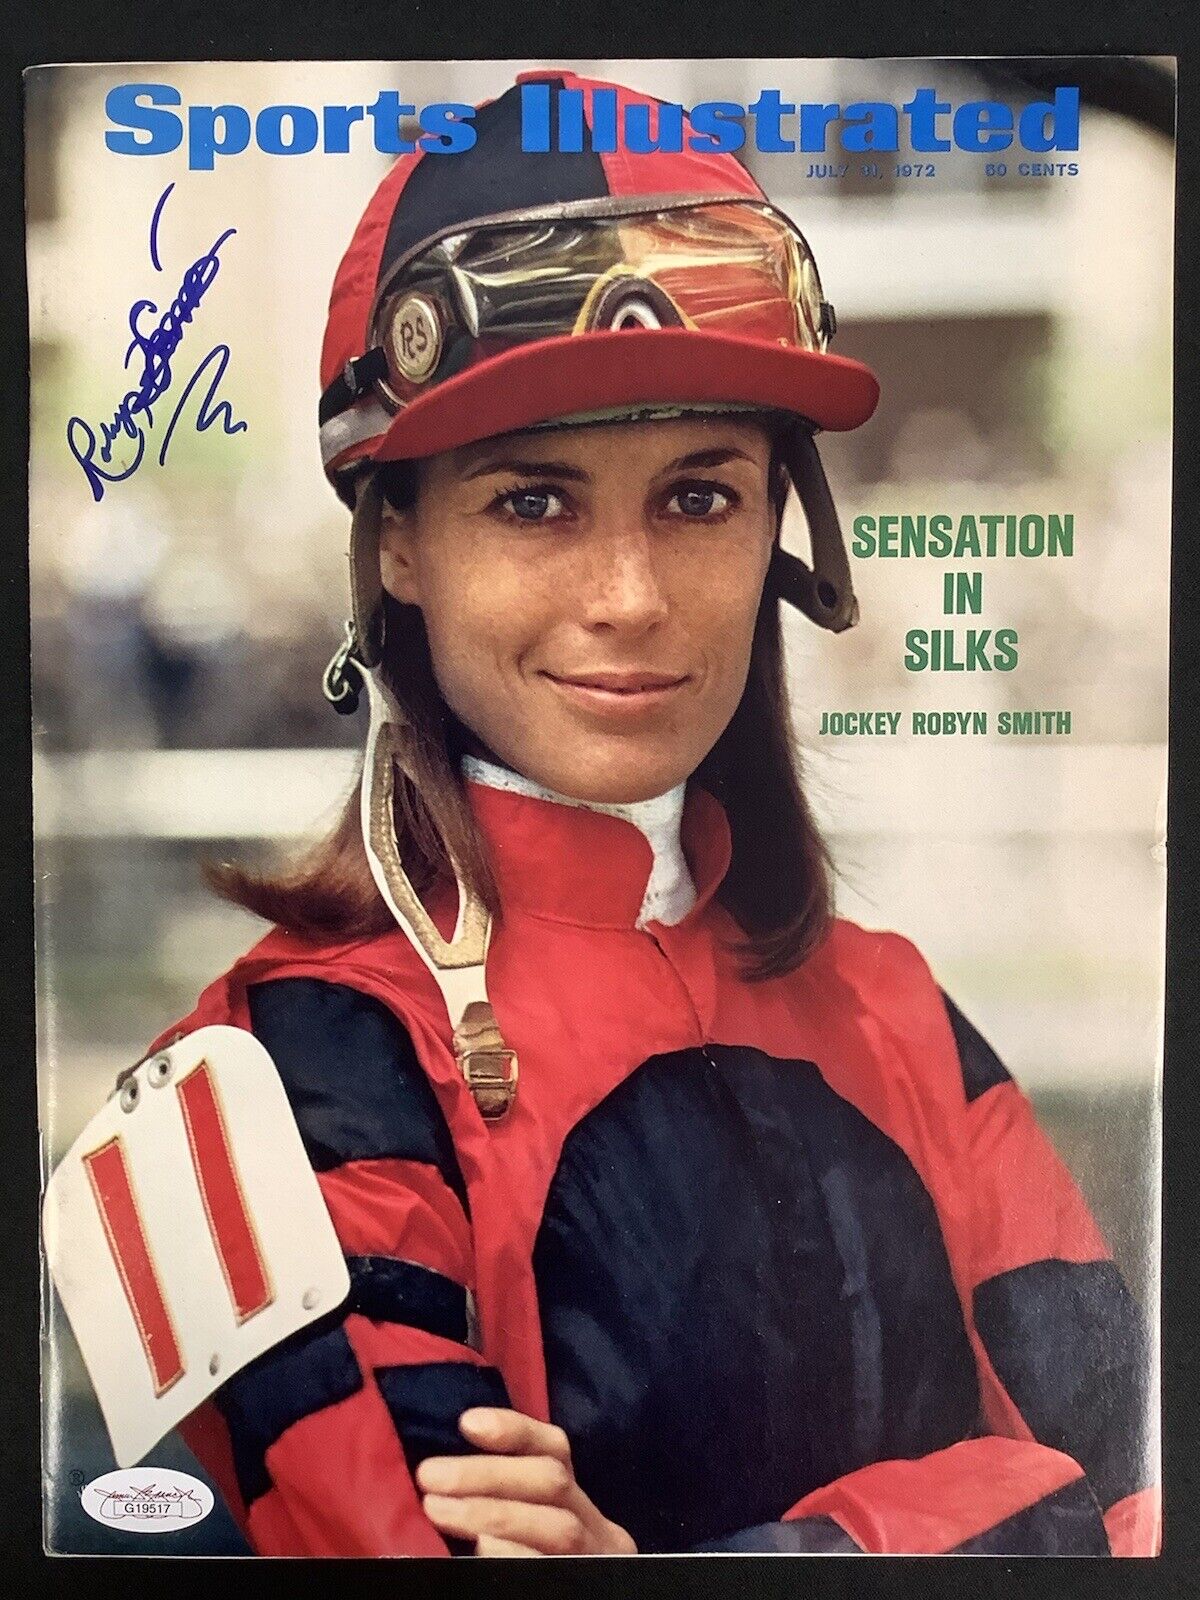 Robyn Smith Signed Sports Illustrated 7/31/72 NO LABEL Jockey Silk Autograph JSA Без бренда